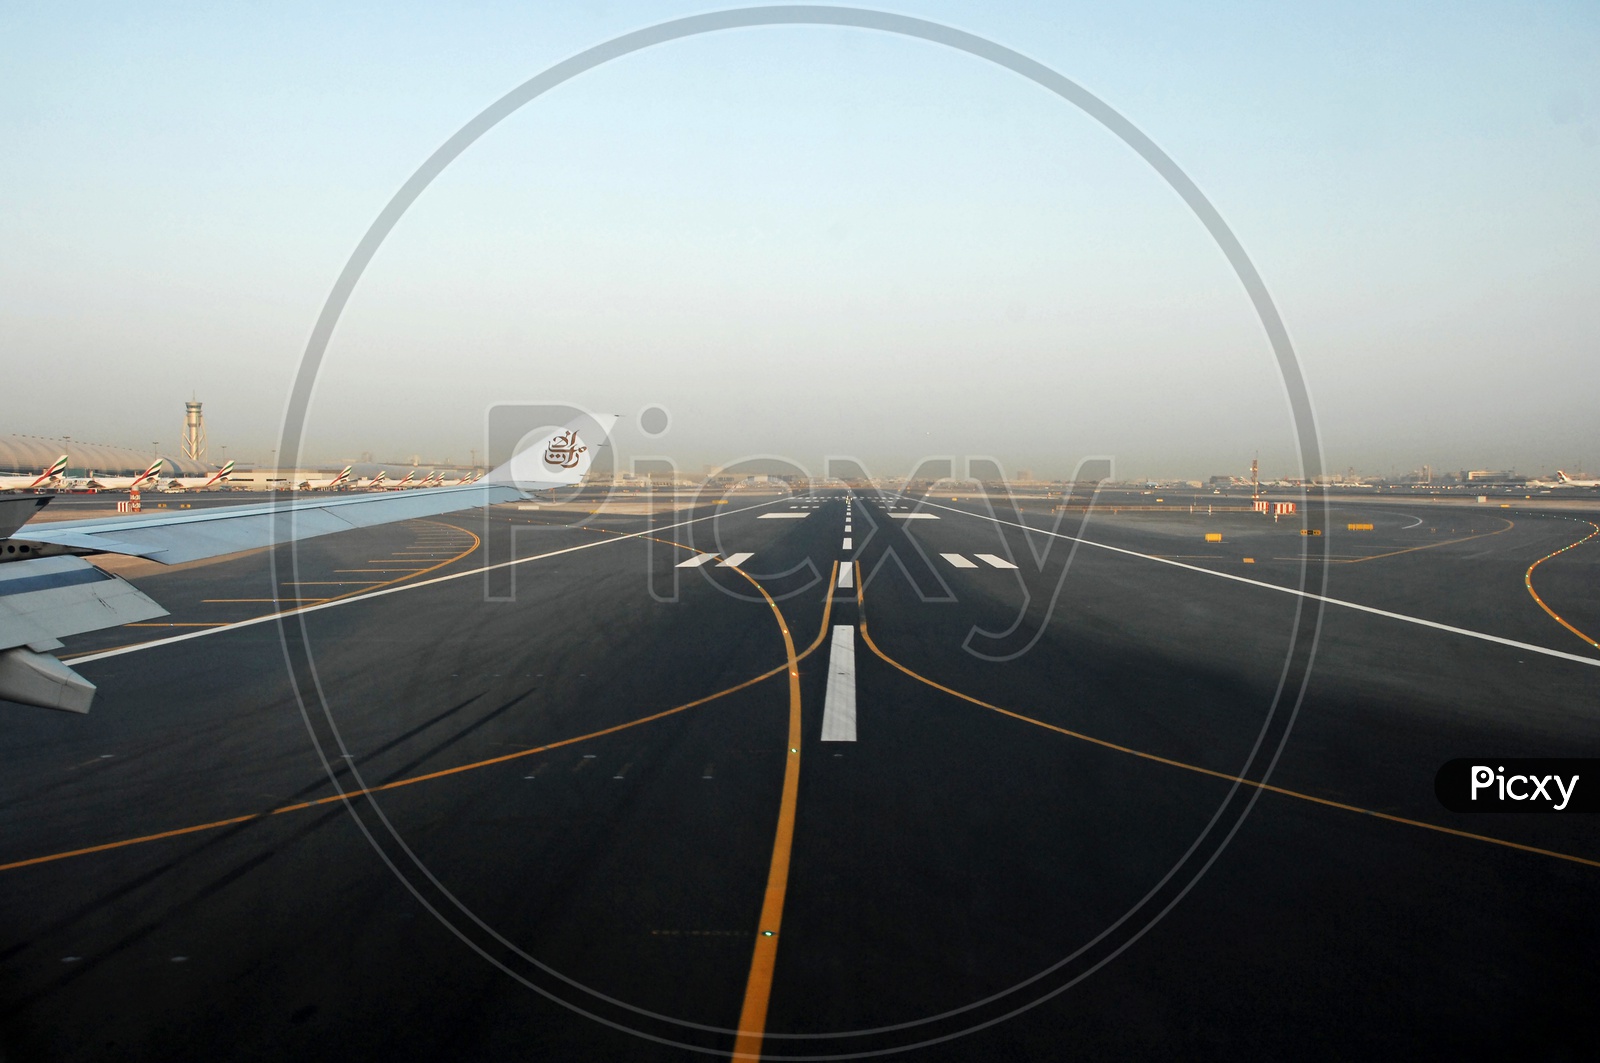 Flight runway captured from flight window